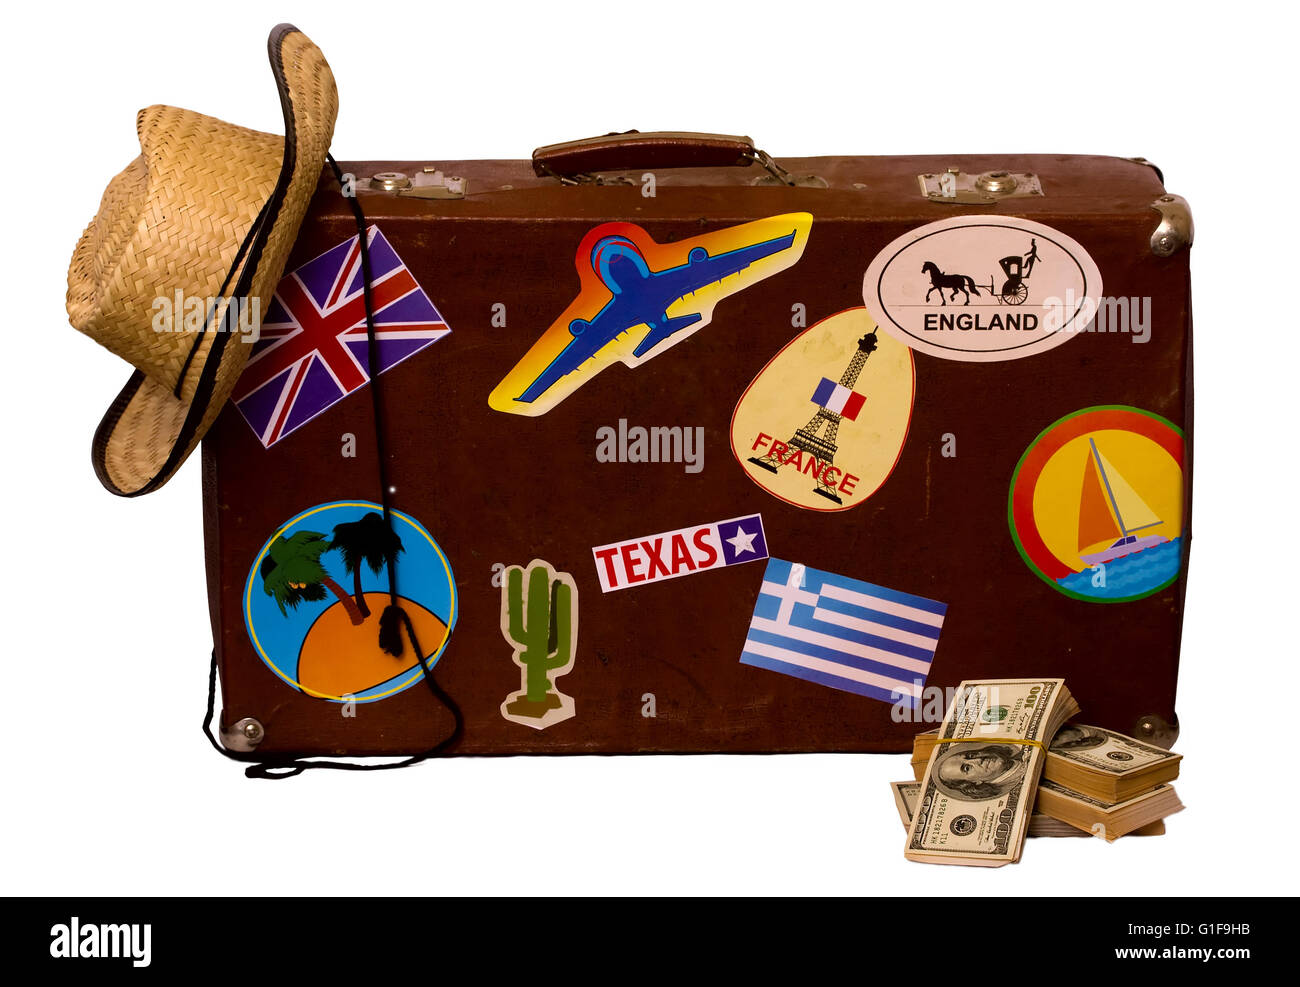 minsda alta calidad equipaje pegatinas maleta parches vintage